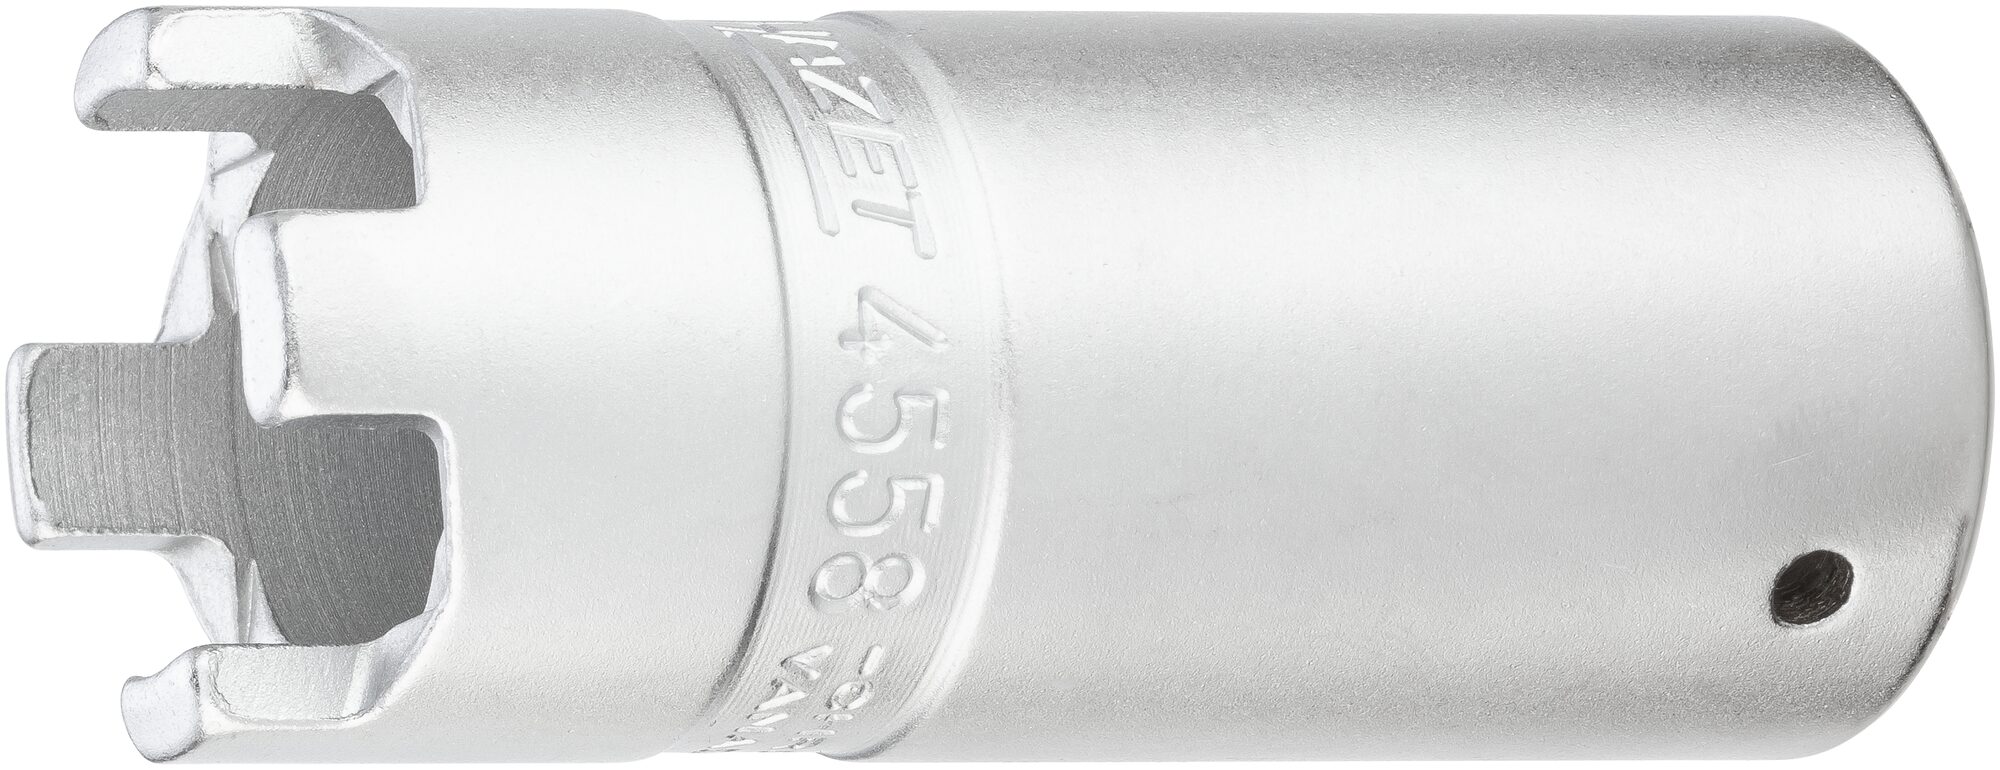 HAZET Druckmutter-Zapfenschlüssel 4558 · Vierkant hohl 12,5 mm (1/2 Zoll) · 28.4 mm